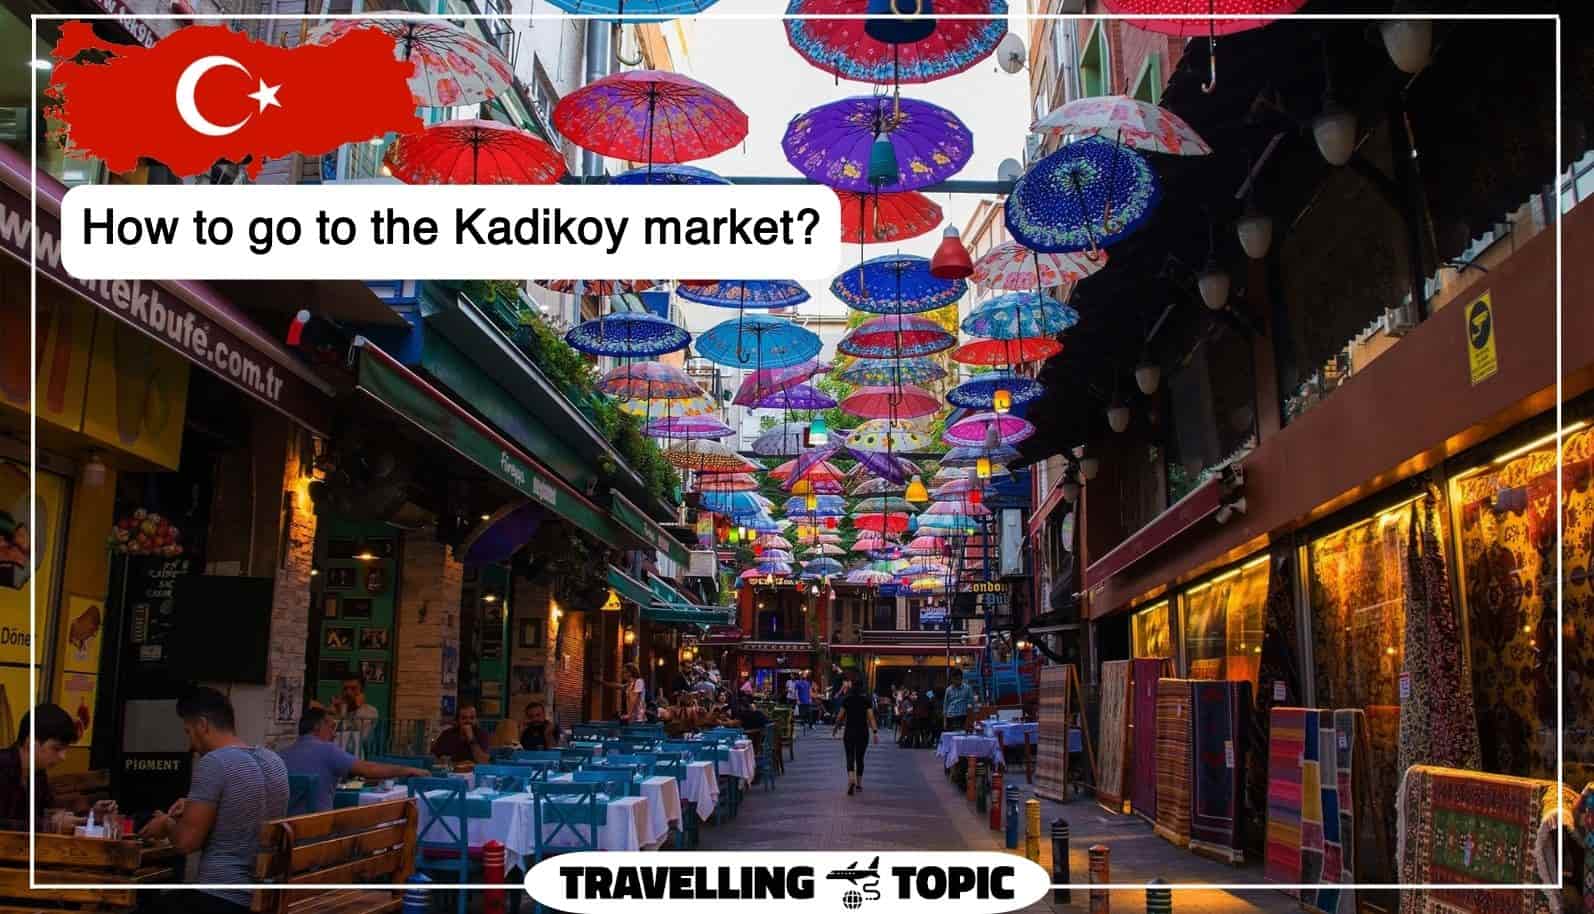 How to go to the Kadikoy market